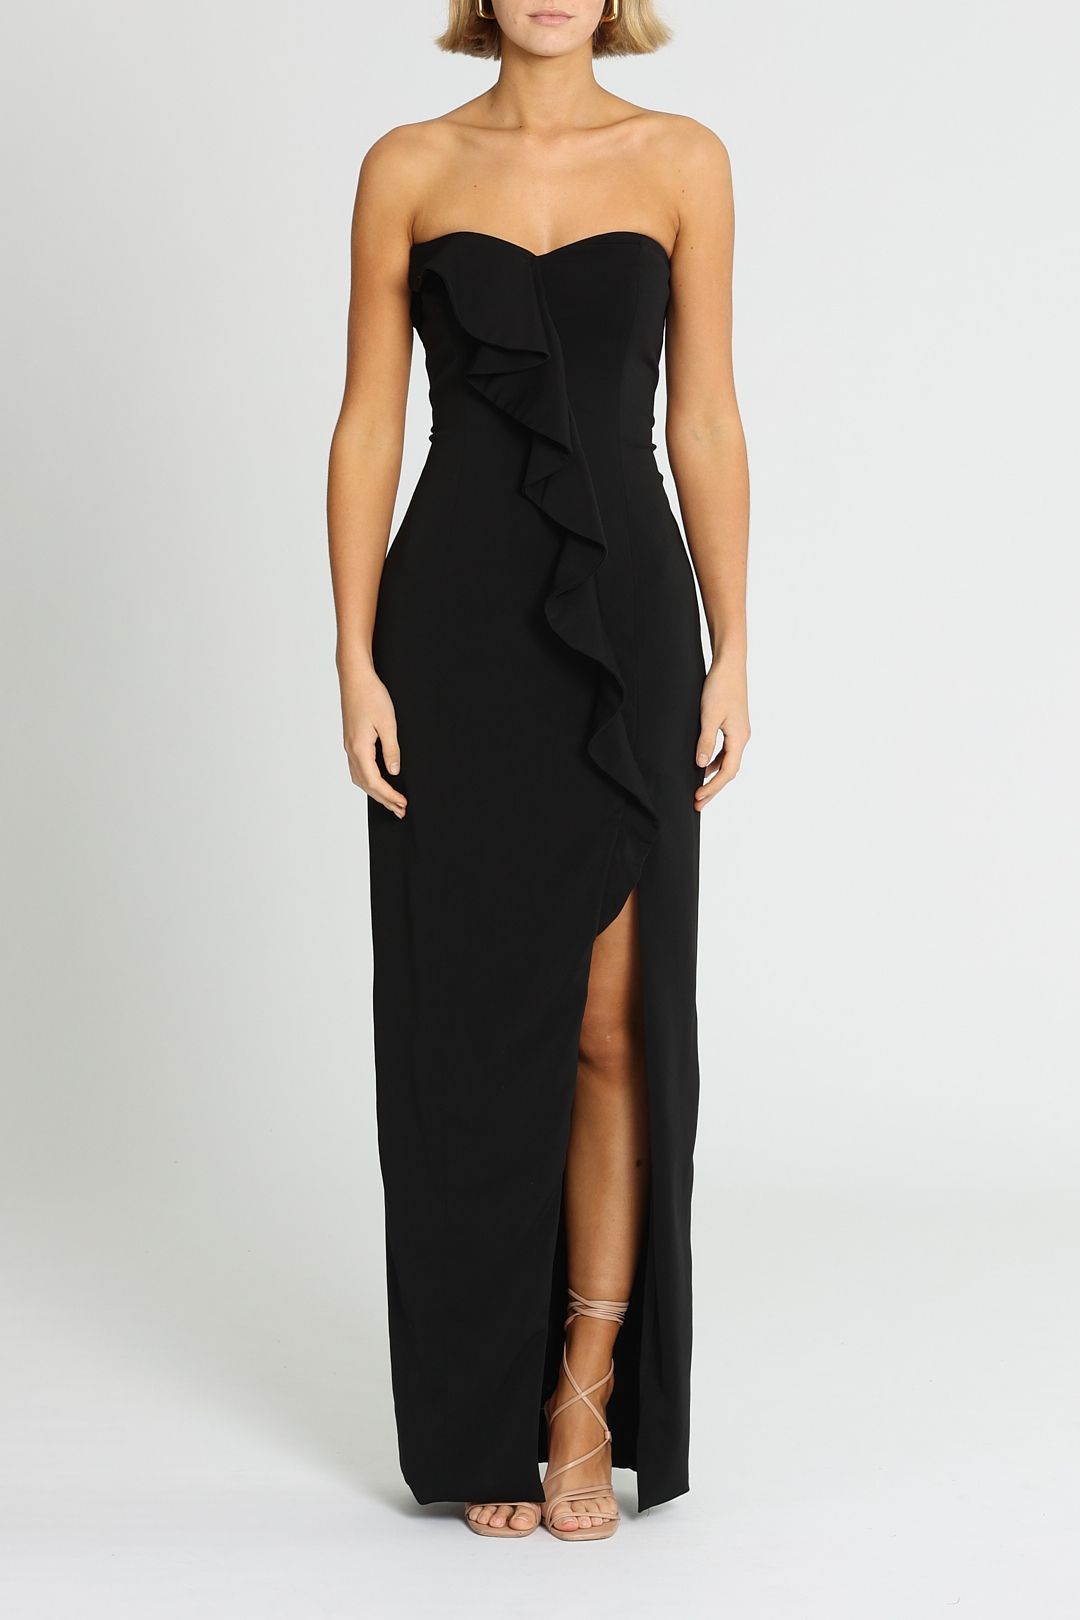 Strapless Split Evening Dress in Black by SKIVA for Hire